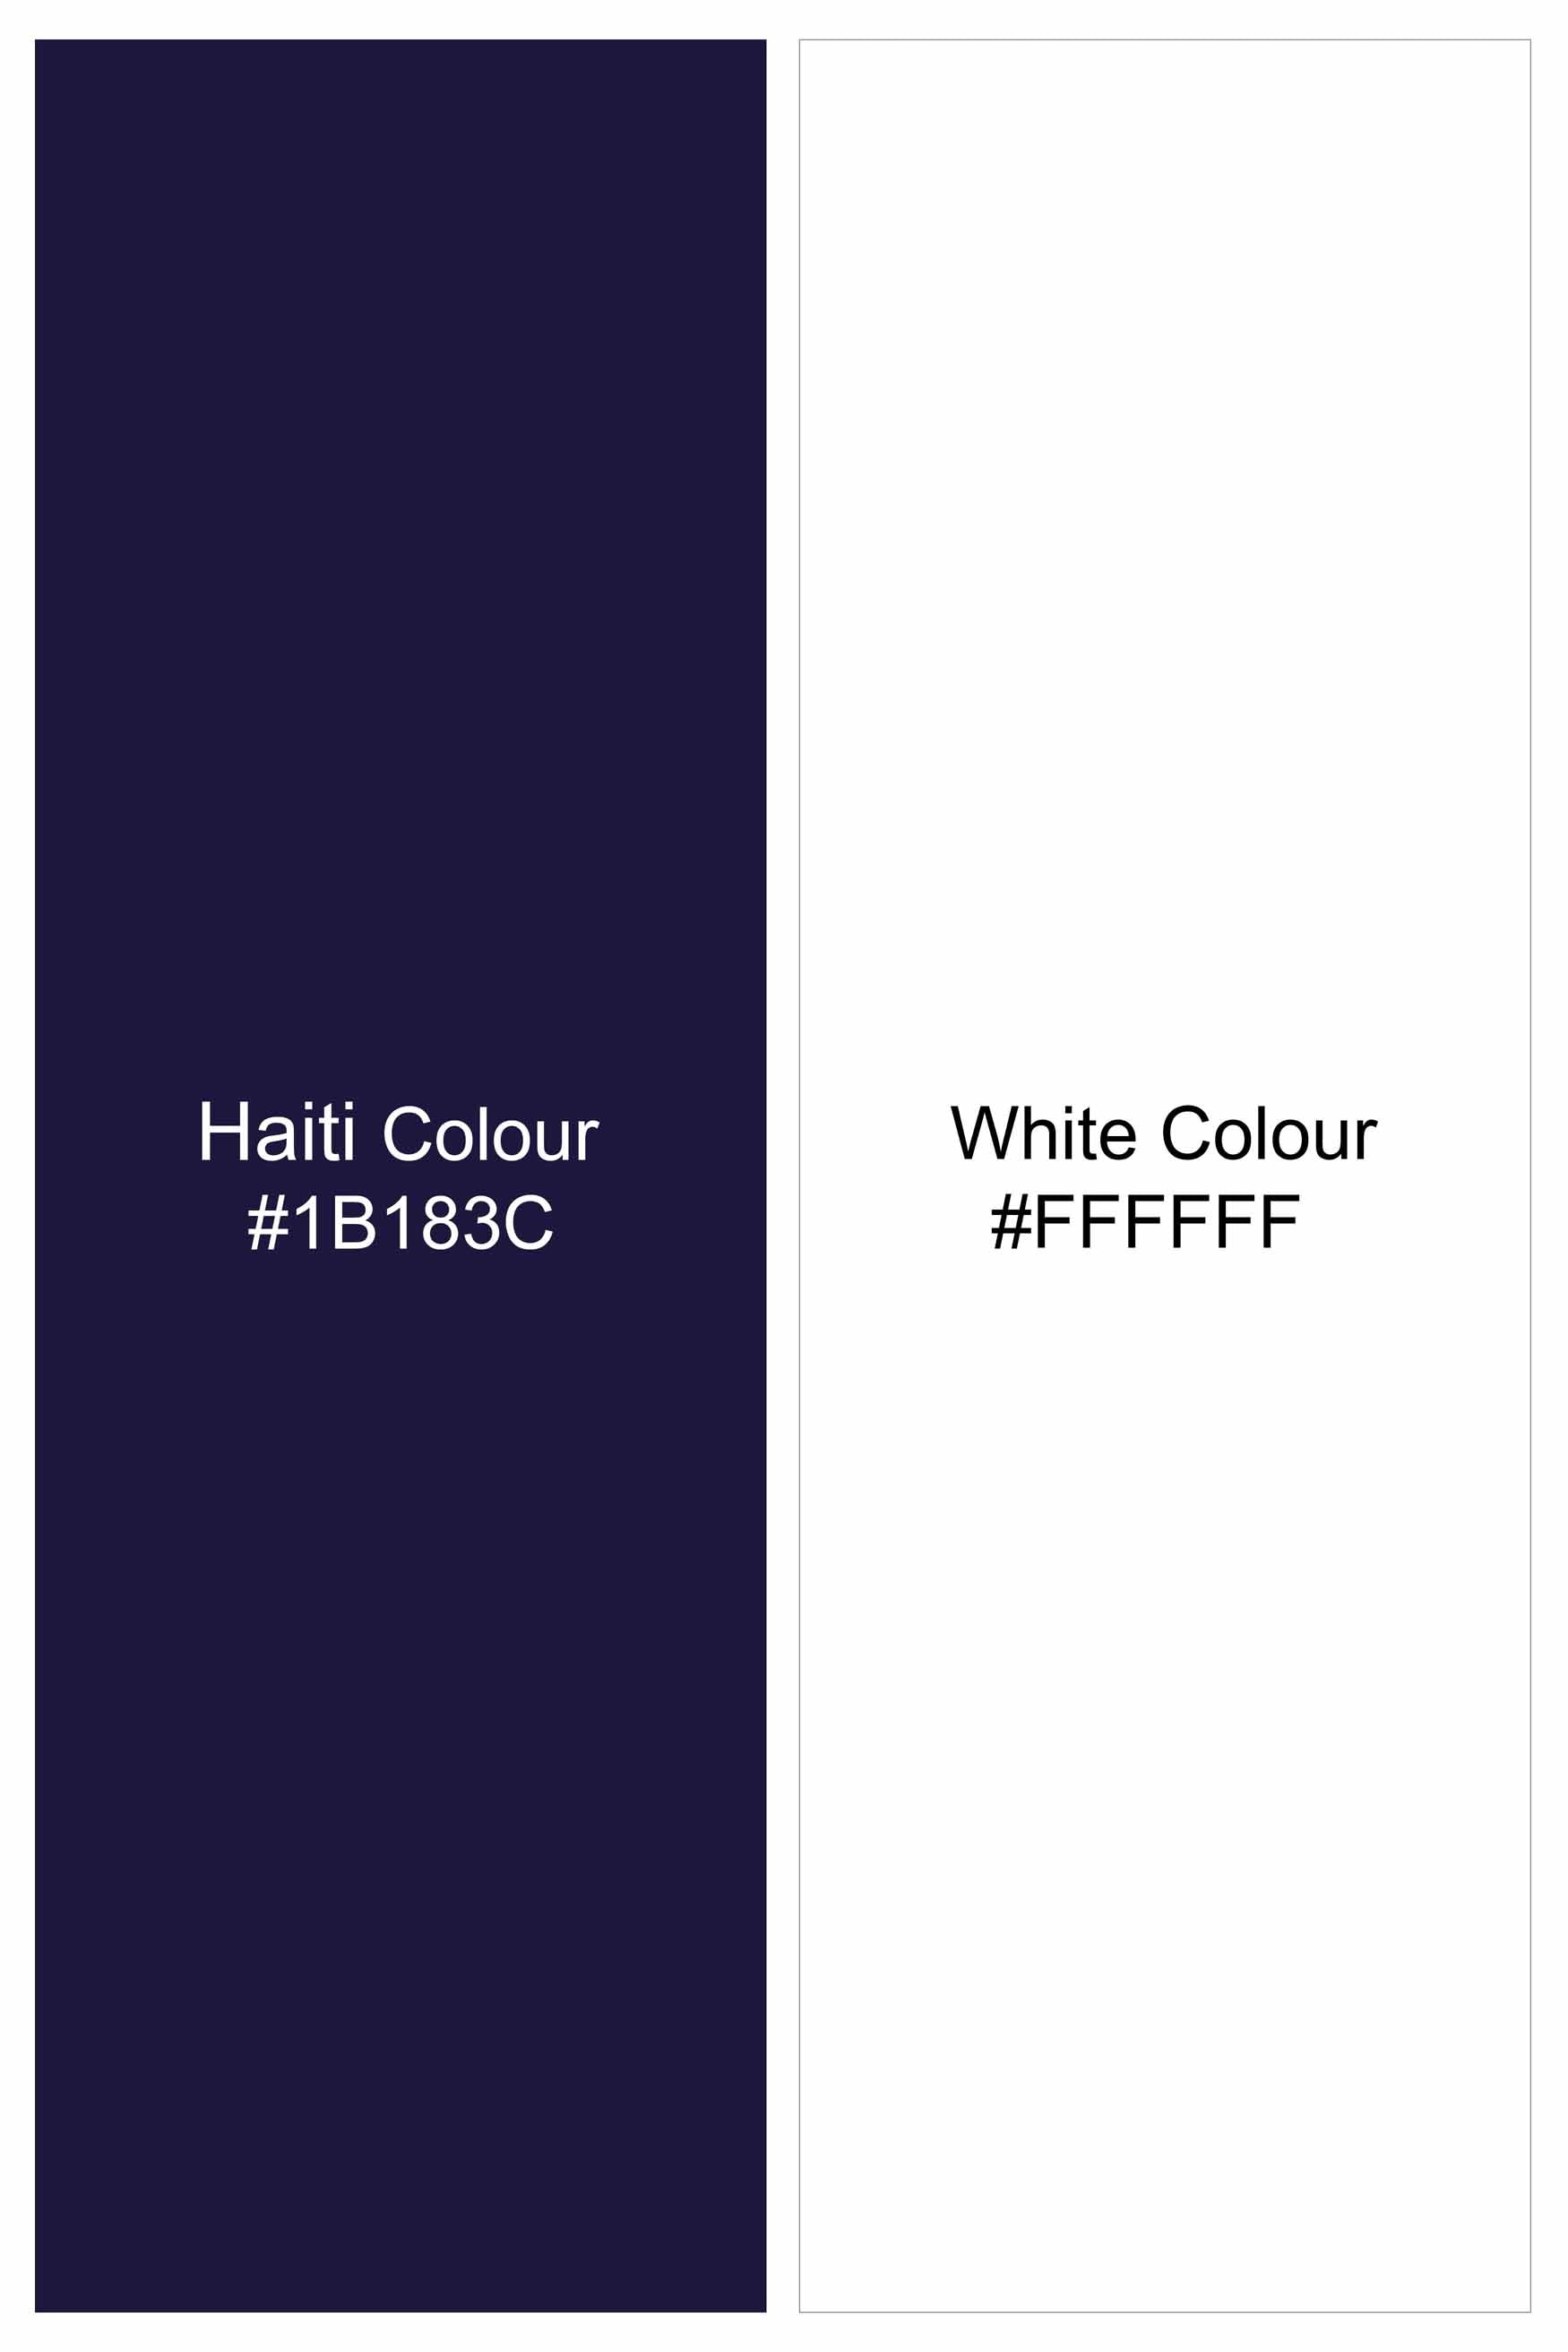 Haiti Blue and White Striped Dobby Textured Premium Giza Cotton Shirt 11600-M-38, 11600-M-H-38, 11600-M-39, 11600-M-H-39, 11600-M-40, 11600-M-H-40, 11600-M-42, 11600-M-H-42, 11600-M-44, 11600-M-H-44, 11600-M-46, 11600-M-H-46, 11600-M-48, 11600-M-H-48, 11600-M-50, 11600-M-H-50, 11600-M-52, 11600-M-H-52 